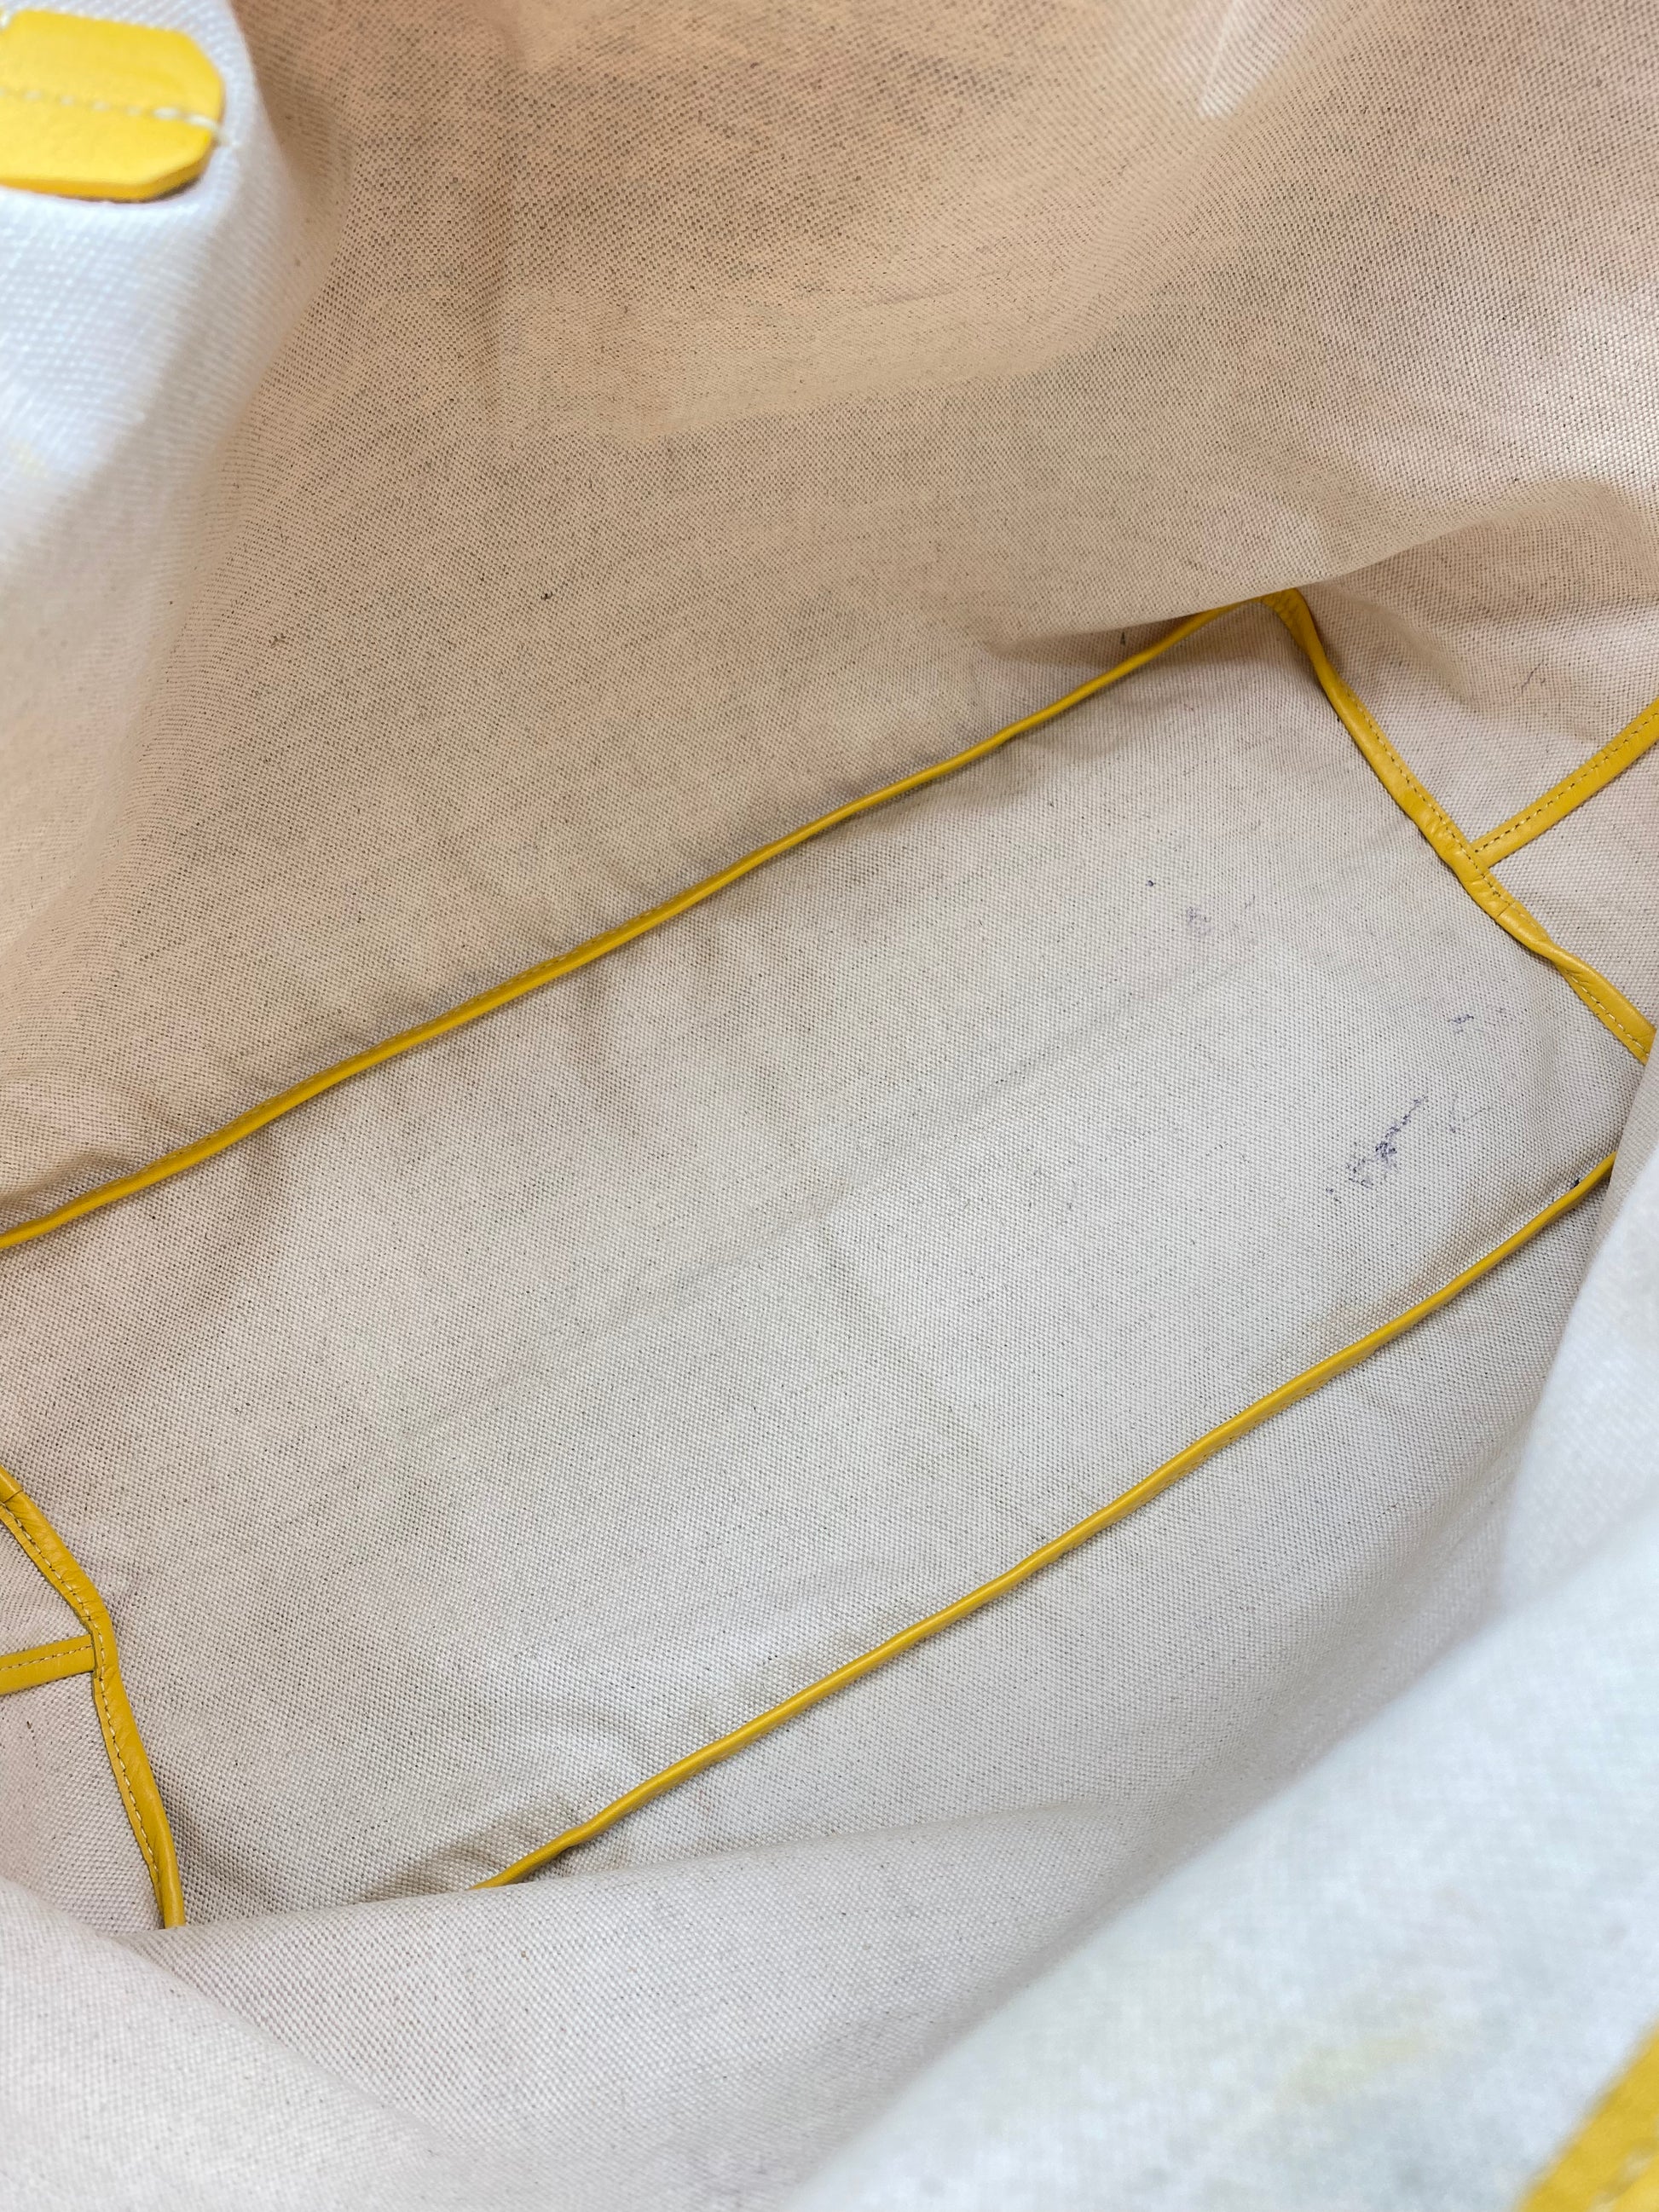 Goyard Goyardine Saint Louis GM Yellow Chevron Tote Bag – Tres Chic Luxury